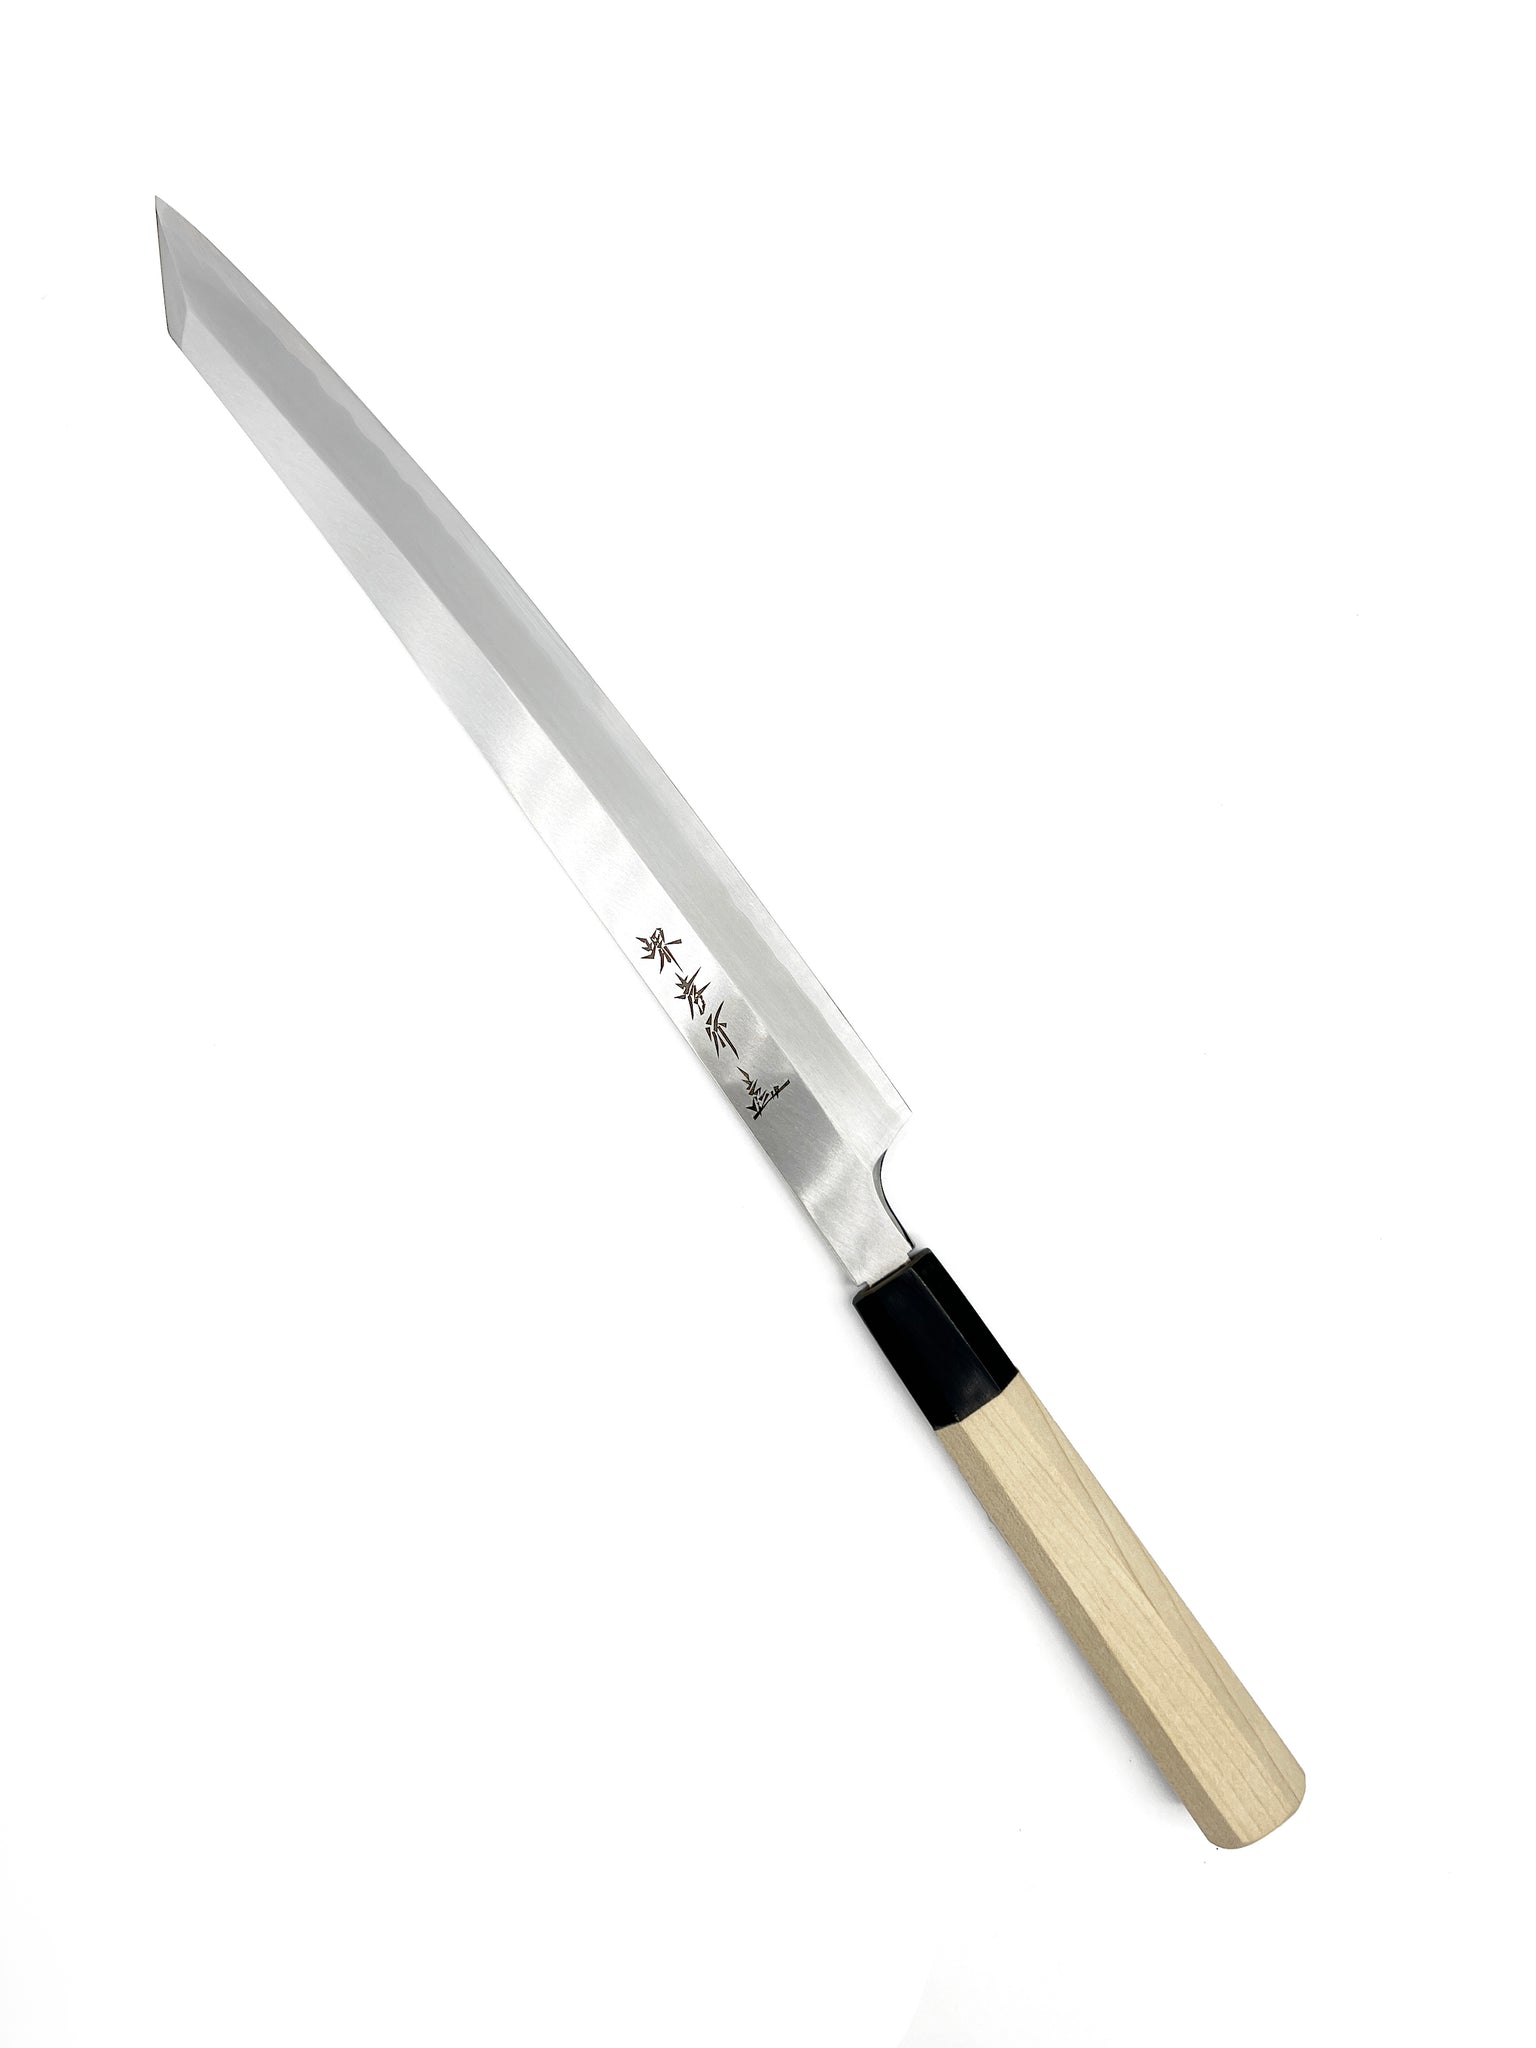 Sakai Takayuki Yanagiba 300mm kengata sushi knife suijihiki Sakimaru ginsan3 stainless steel carbon steel suogo yamatsuka masaru Malaysia Japanese chef knife 